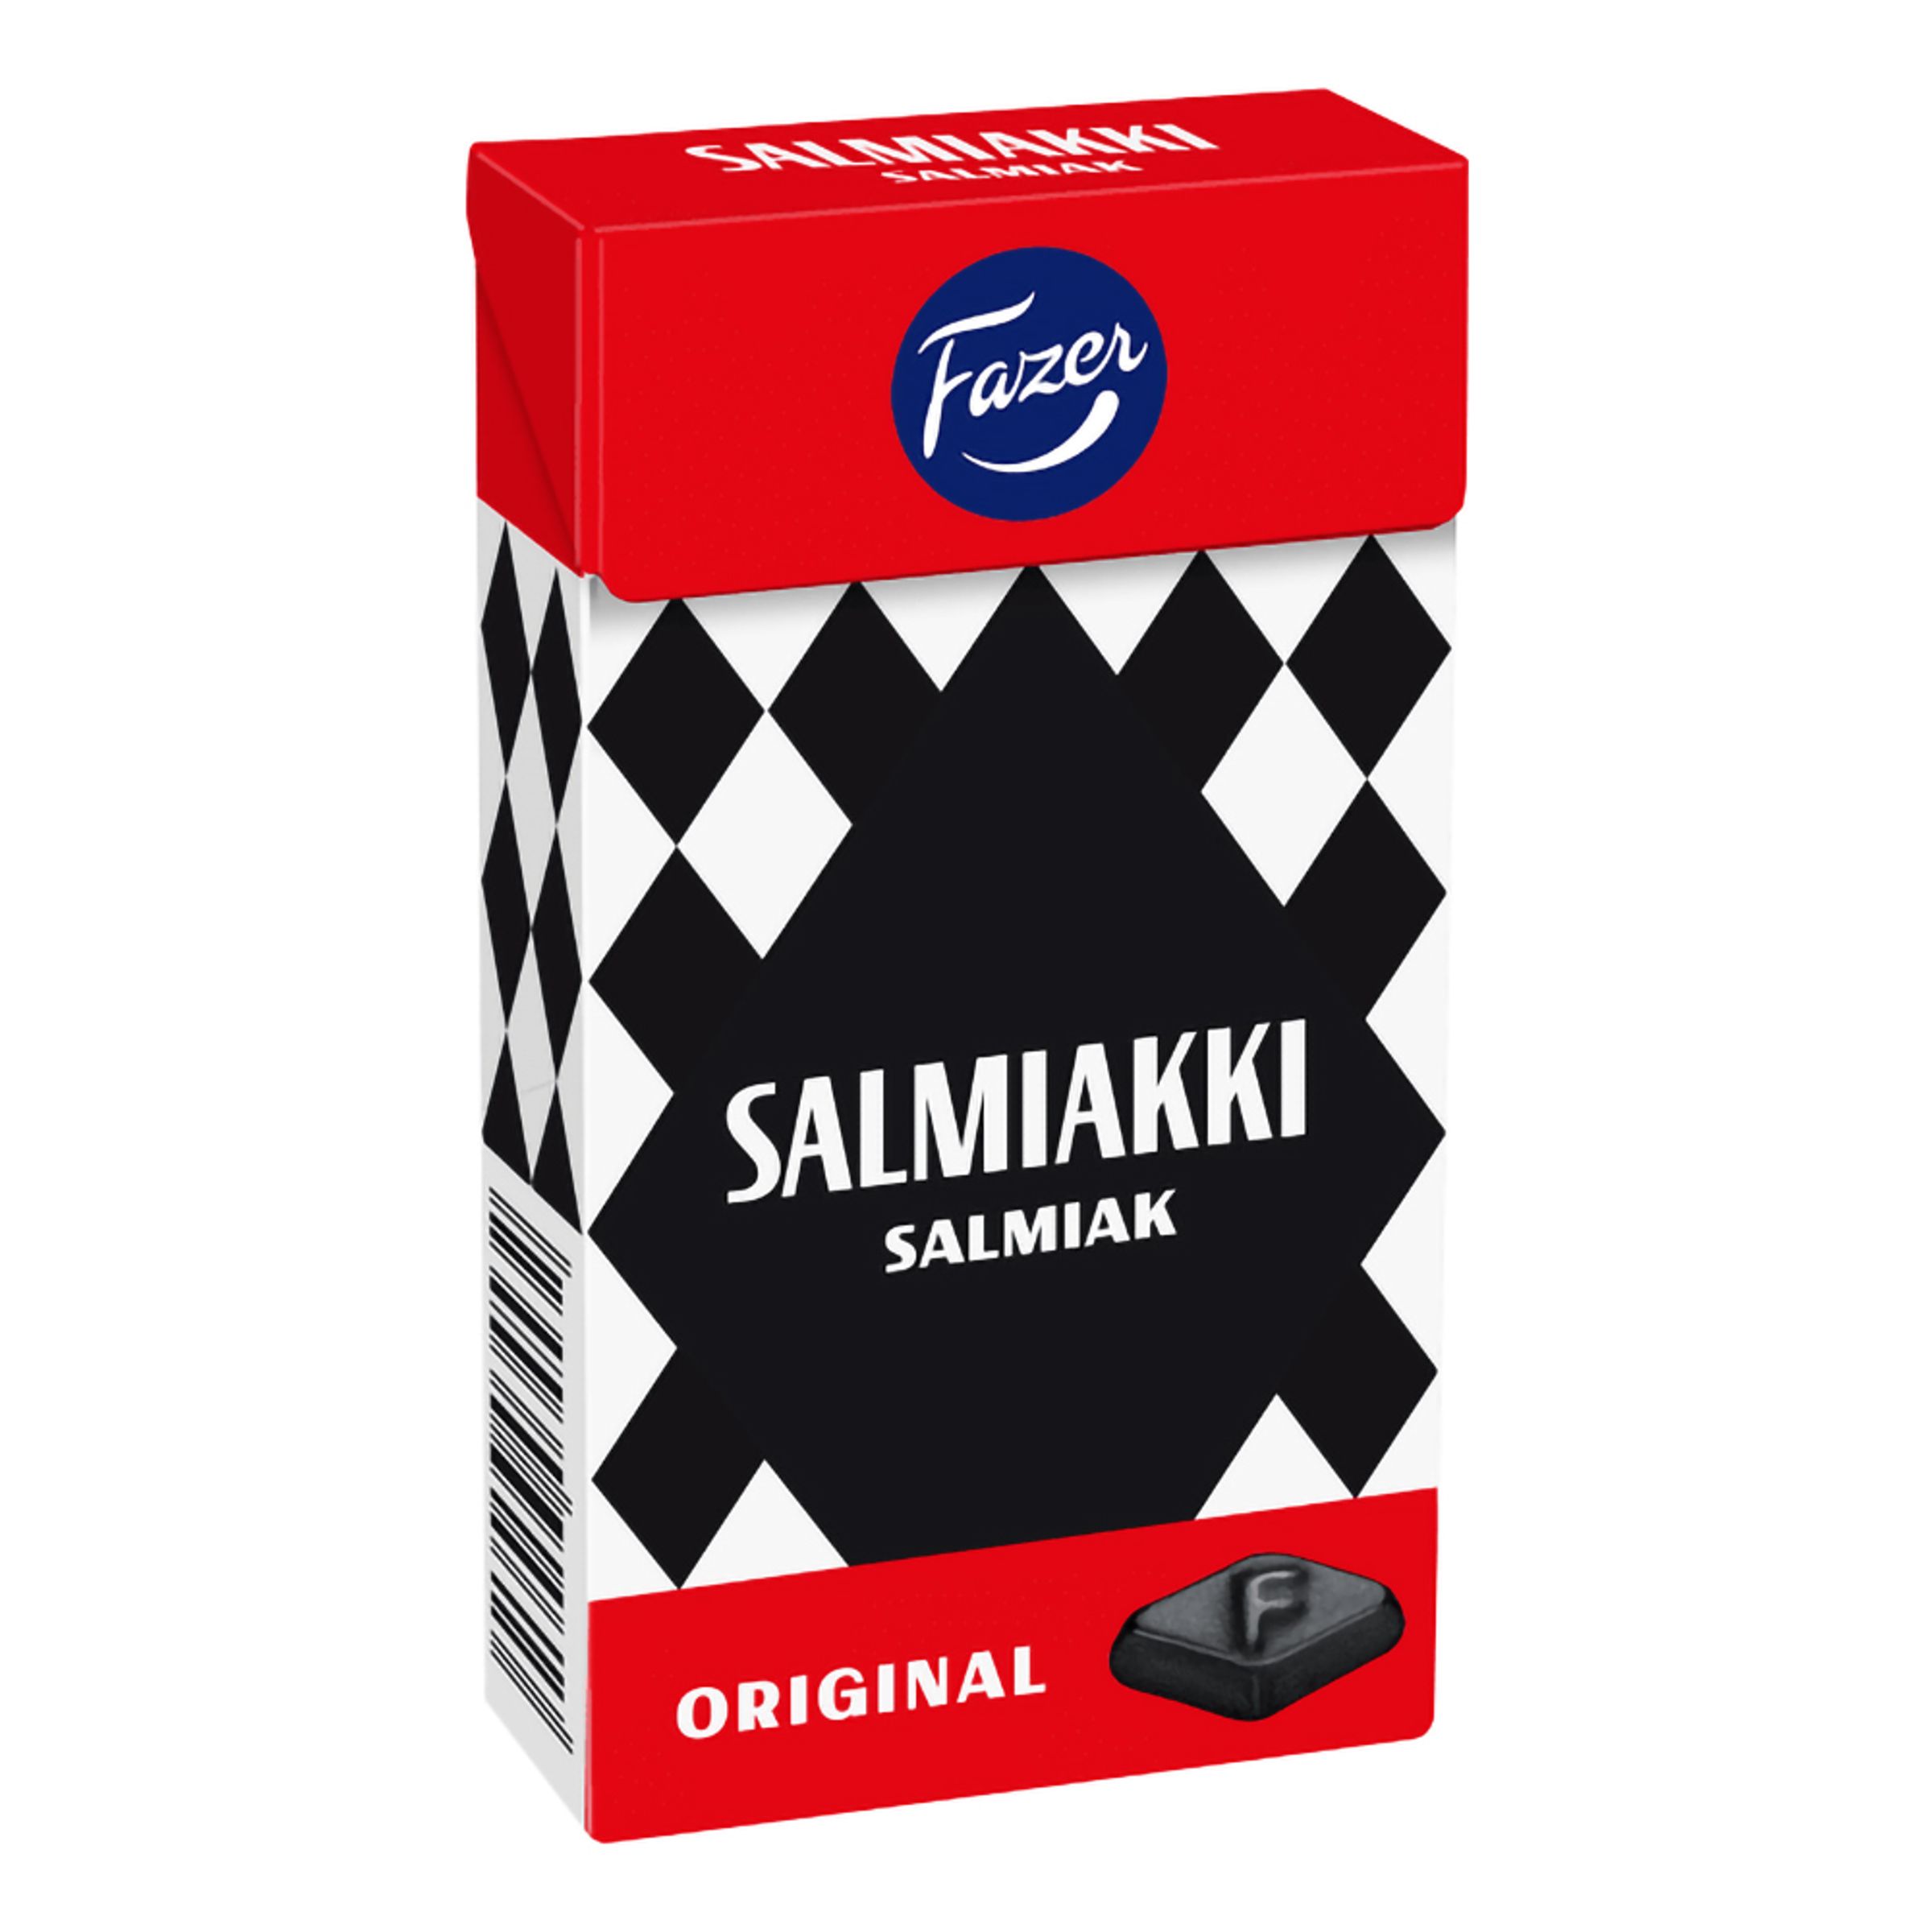 Salmiakki Pastiller - 40 gram